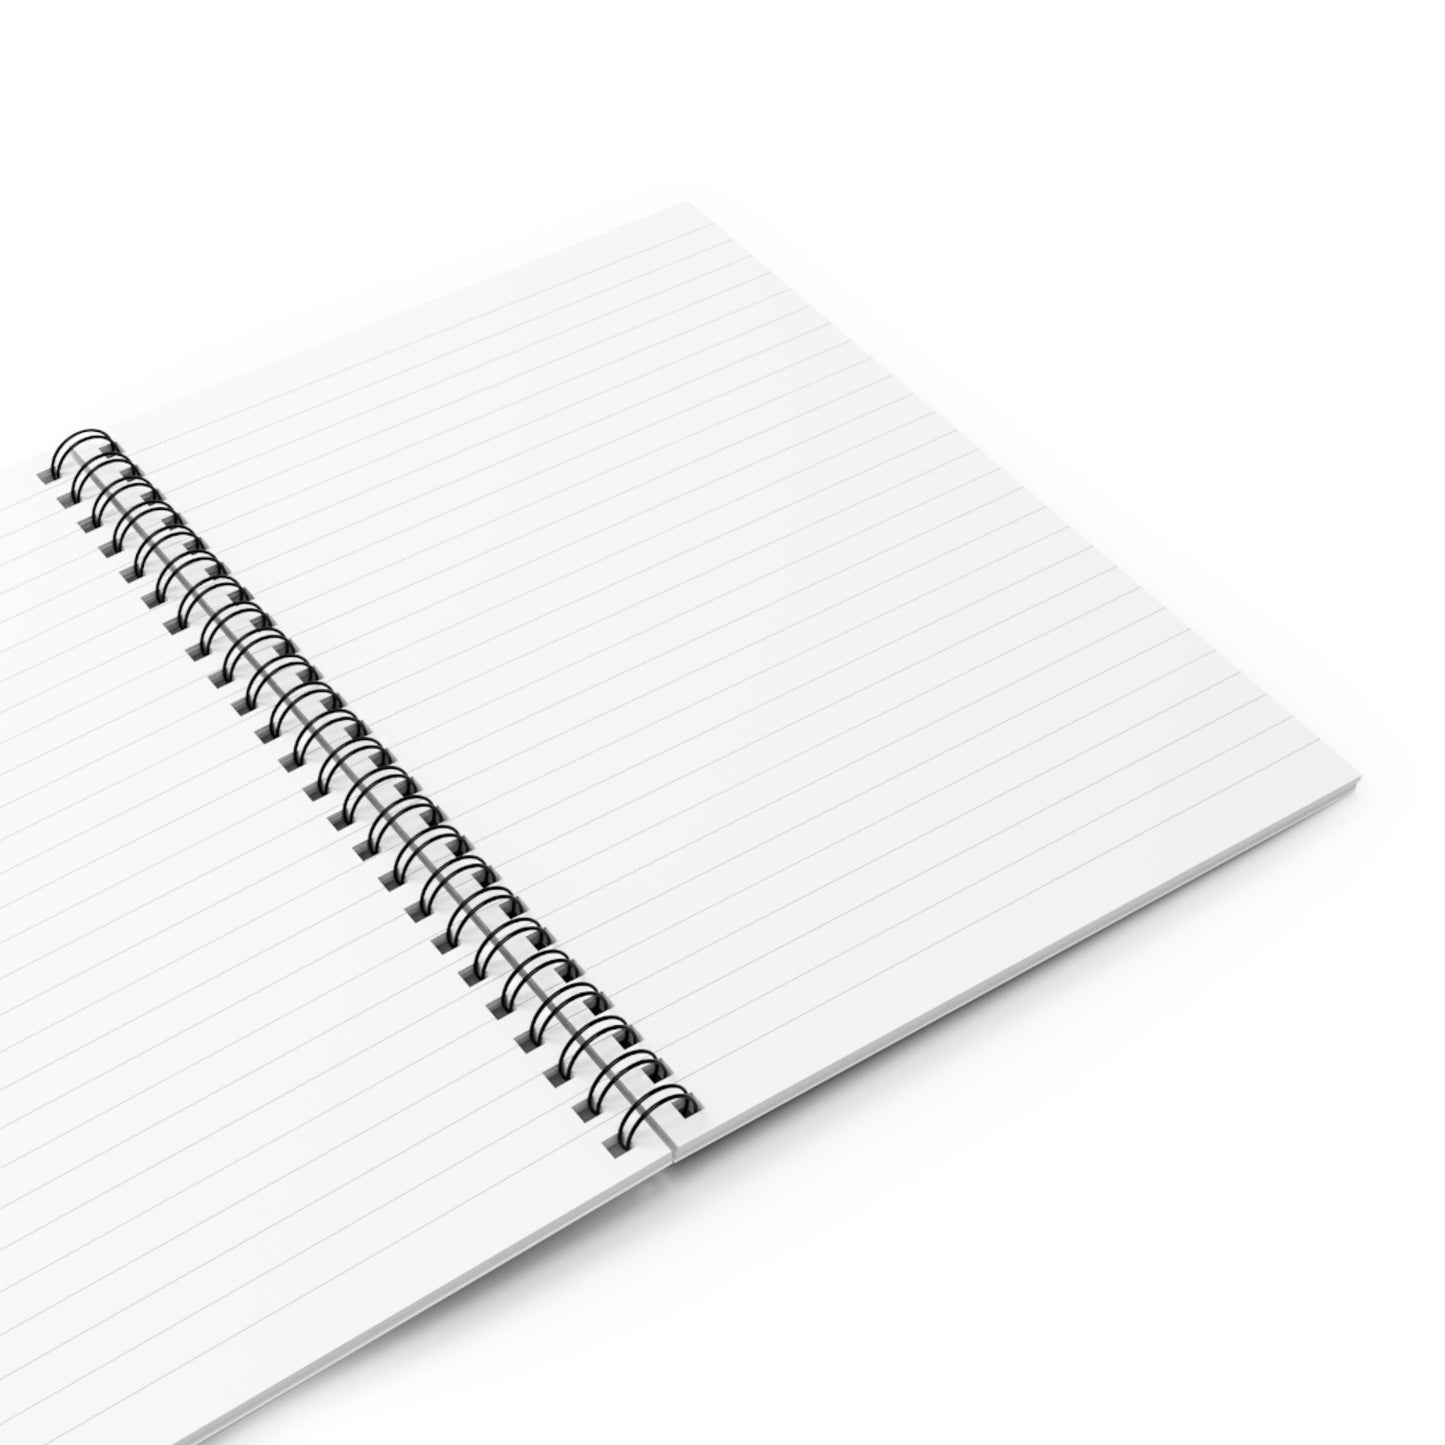 Speechie Pastel Retro Notebook